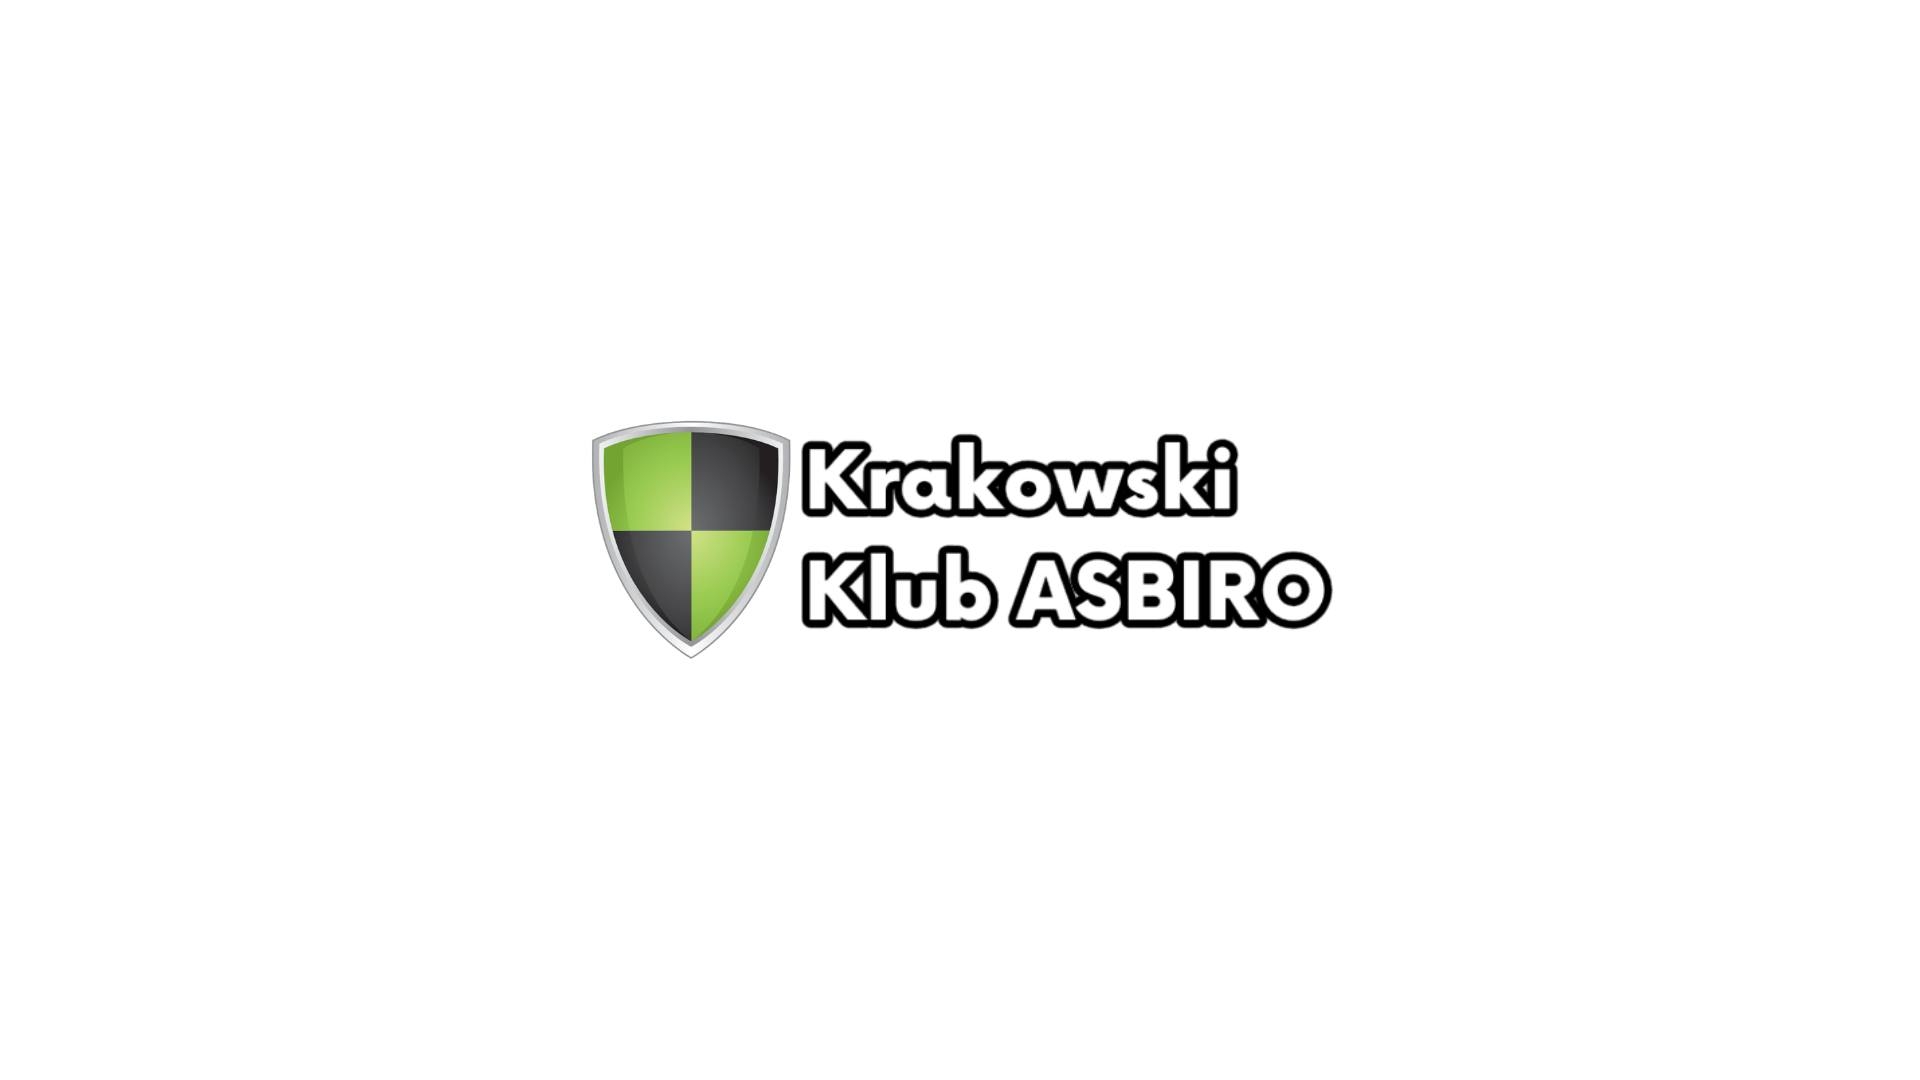 Krakowski Klub Asbiro